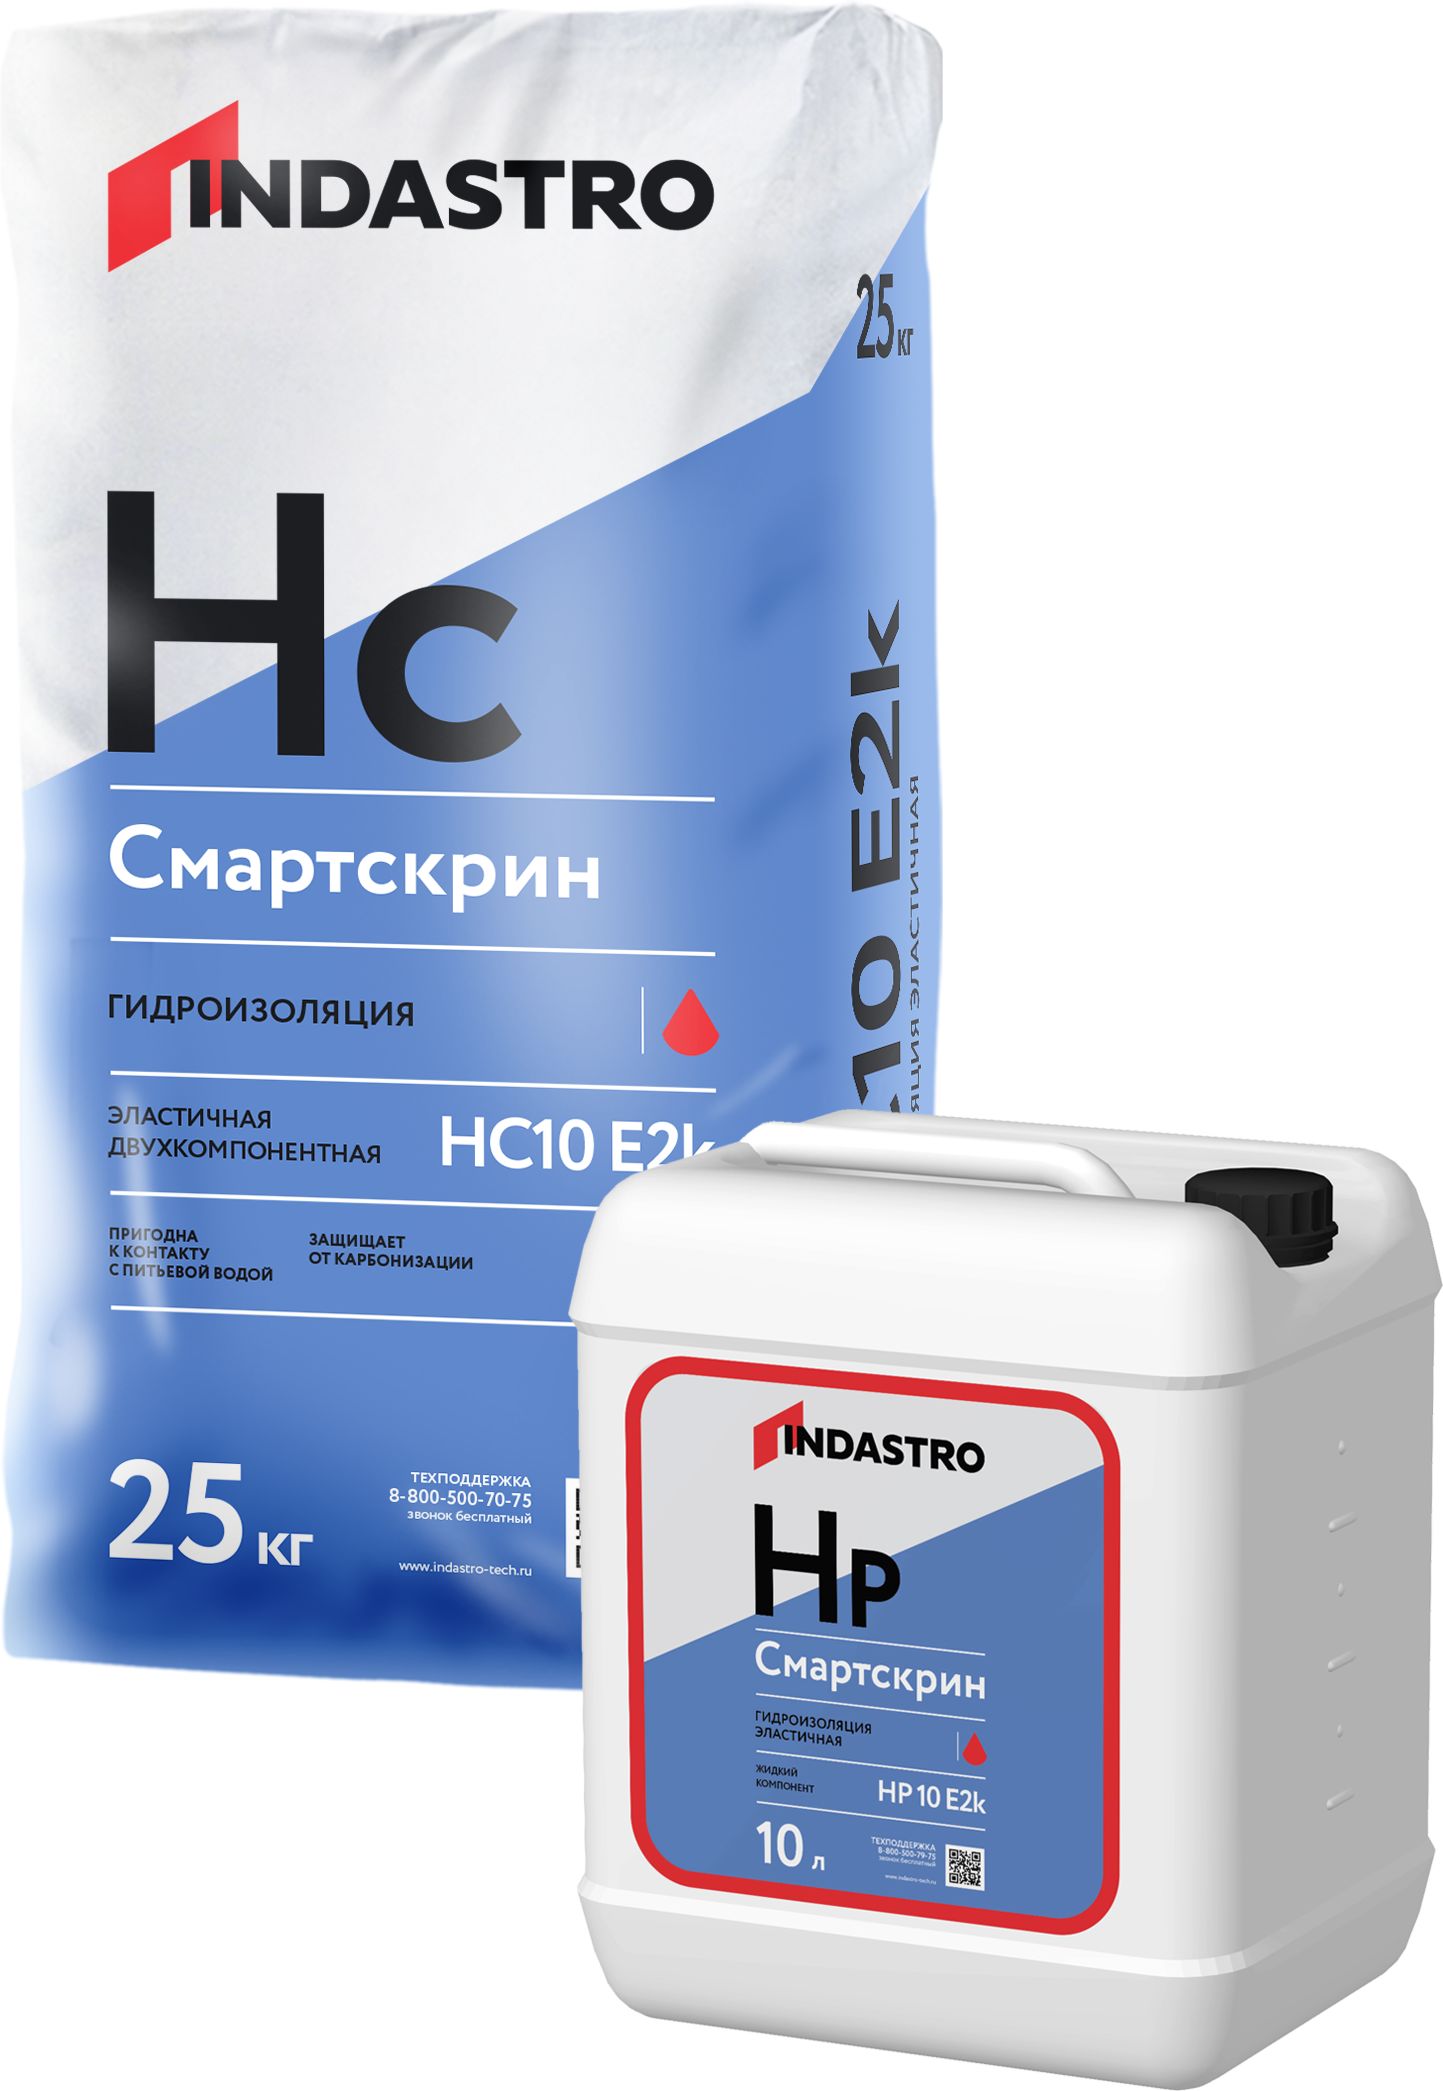 Эластичная гидроизоляция Смартскрин HC10 E2k (сухой компонент) 25 кг